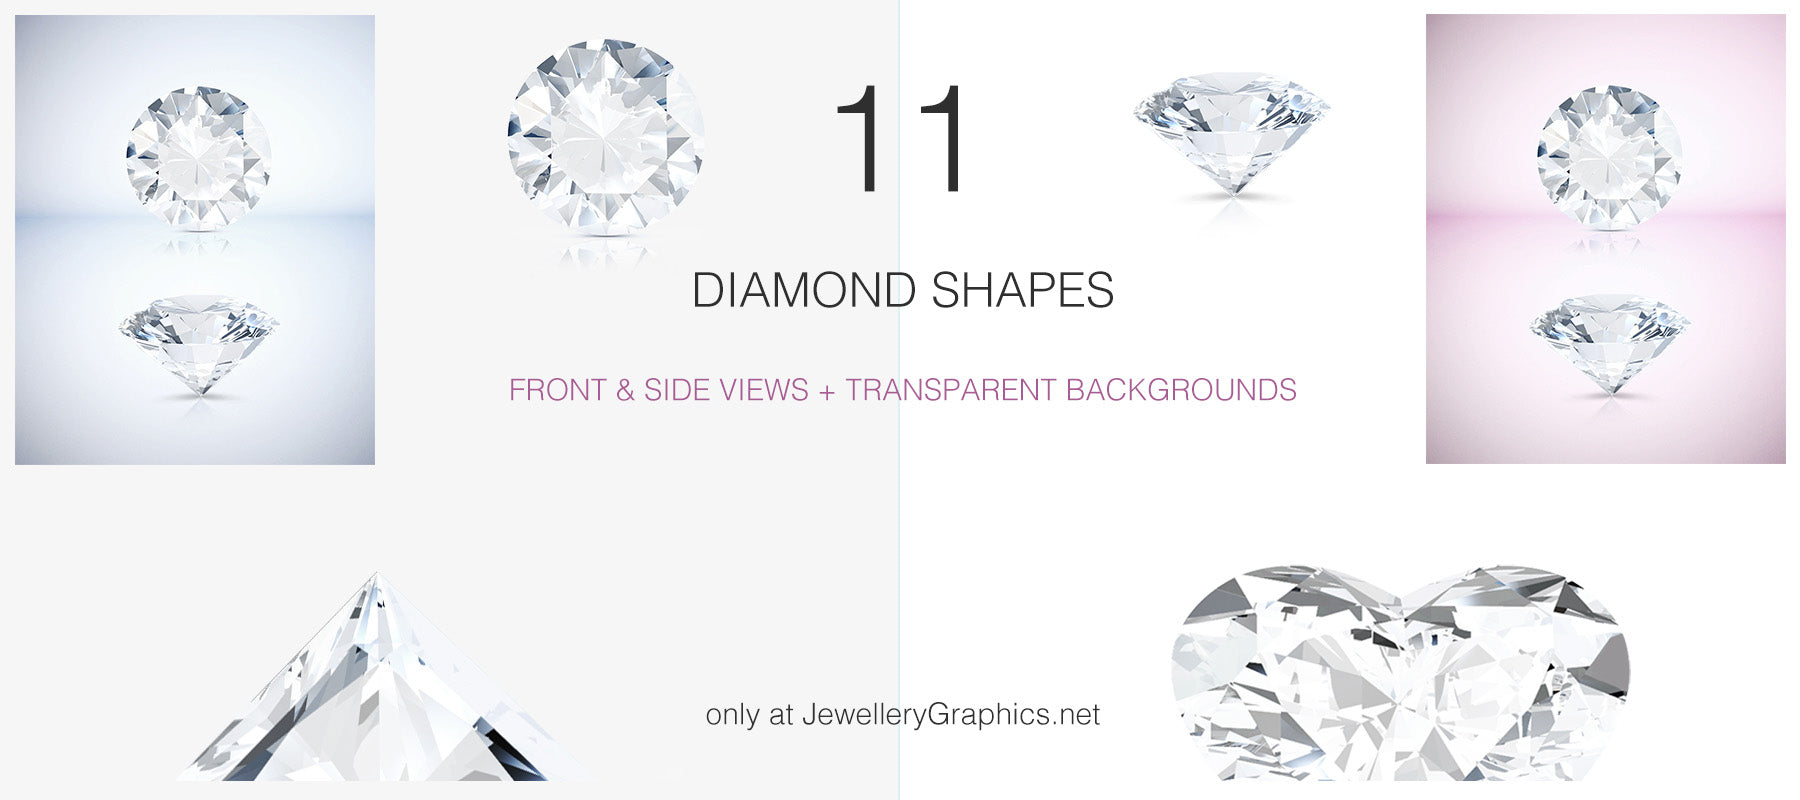 diamond shape images for websites